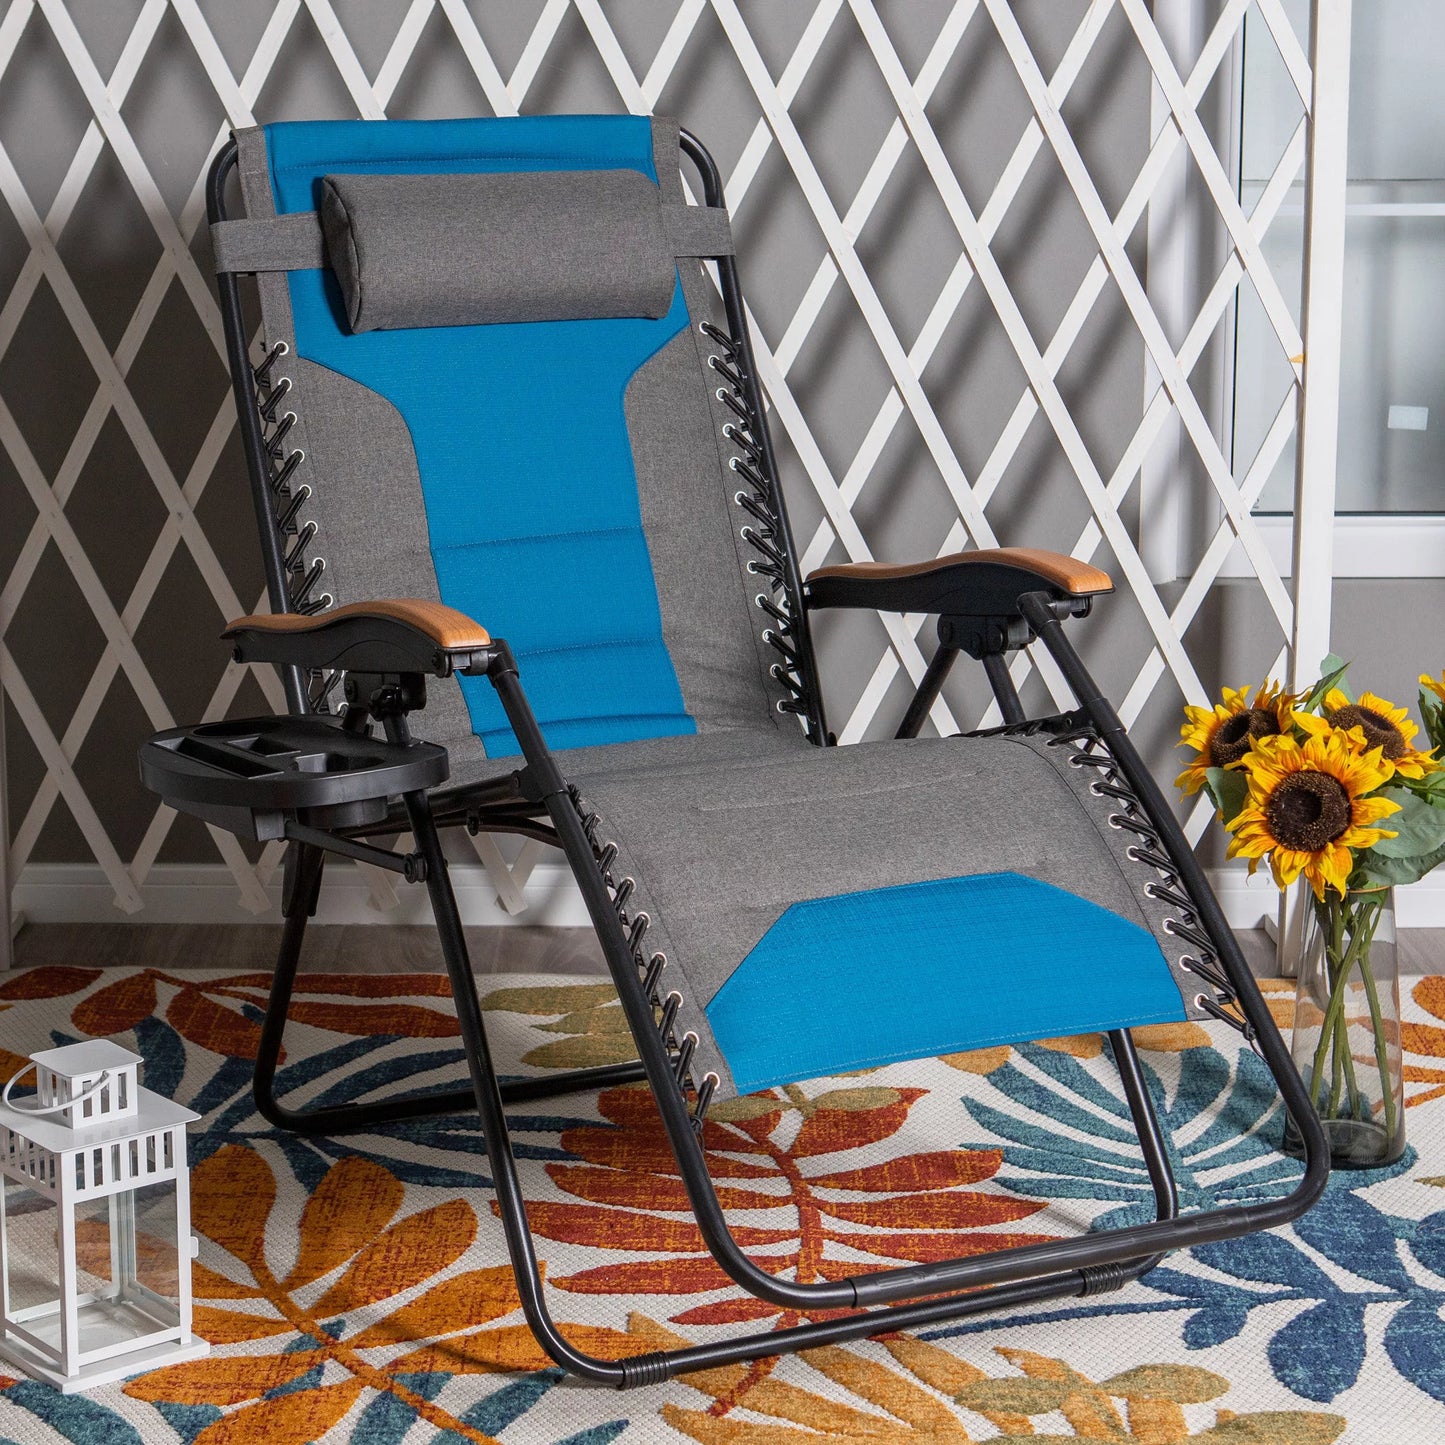 Sophia&William Outdoor XL Oversized Padded Zero Gravity Chair Camping Recliner - Aqua